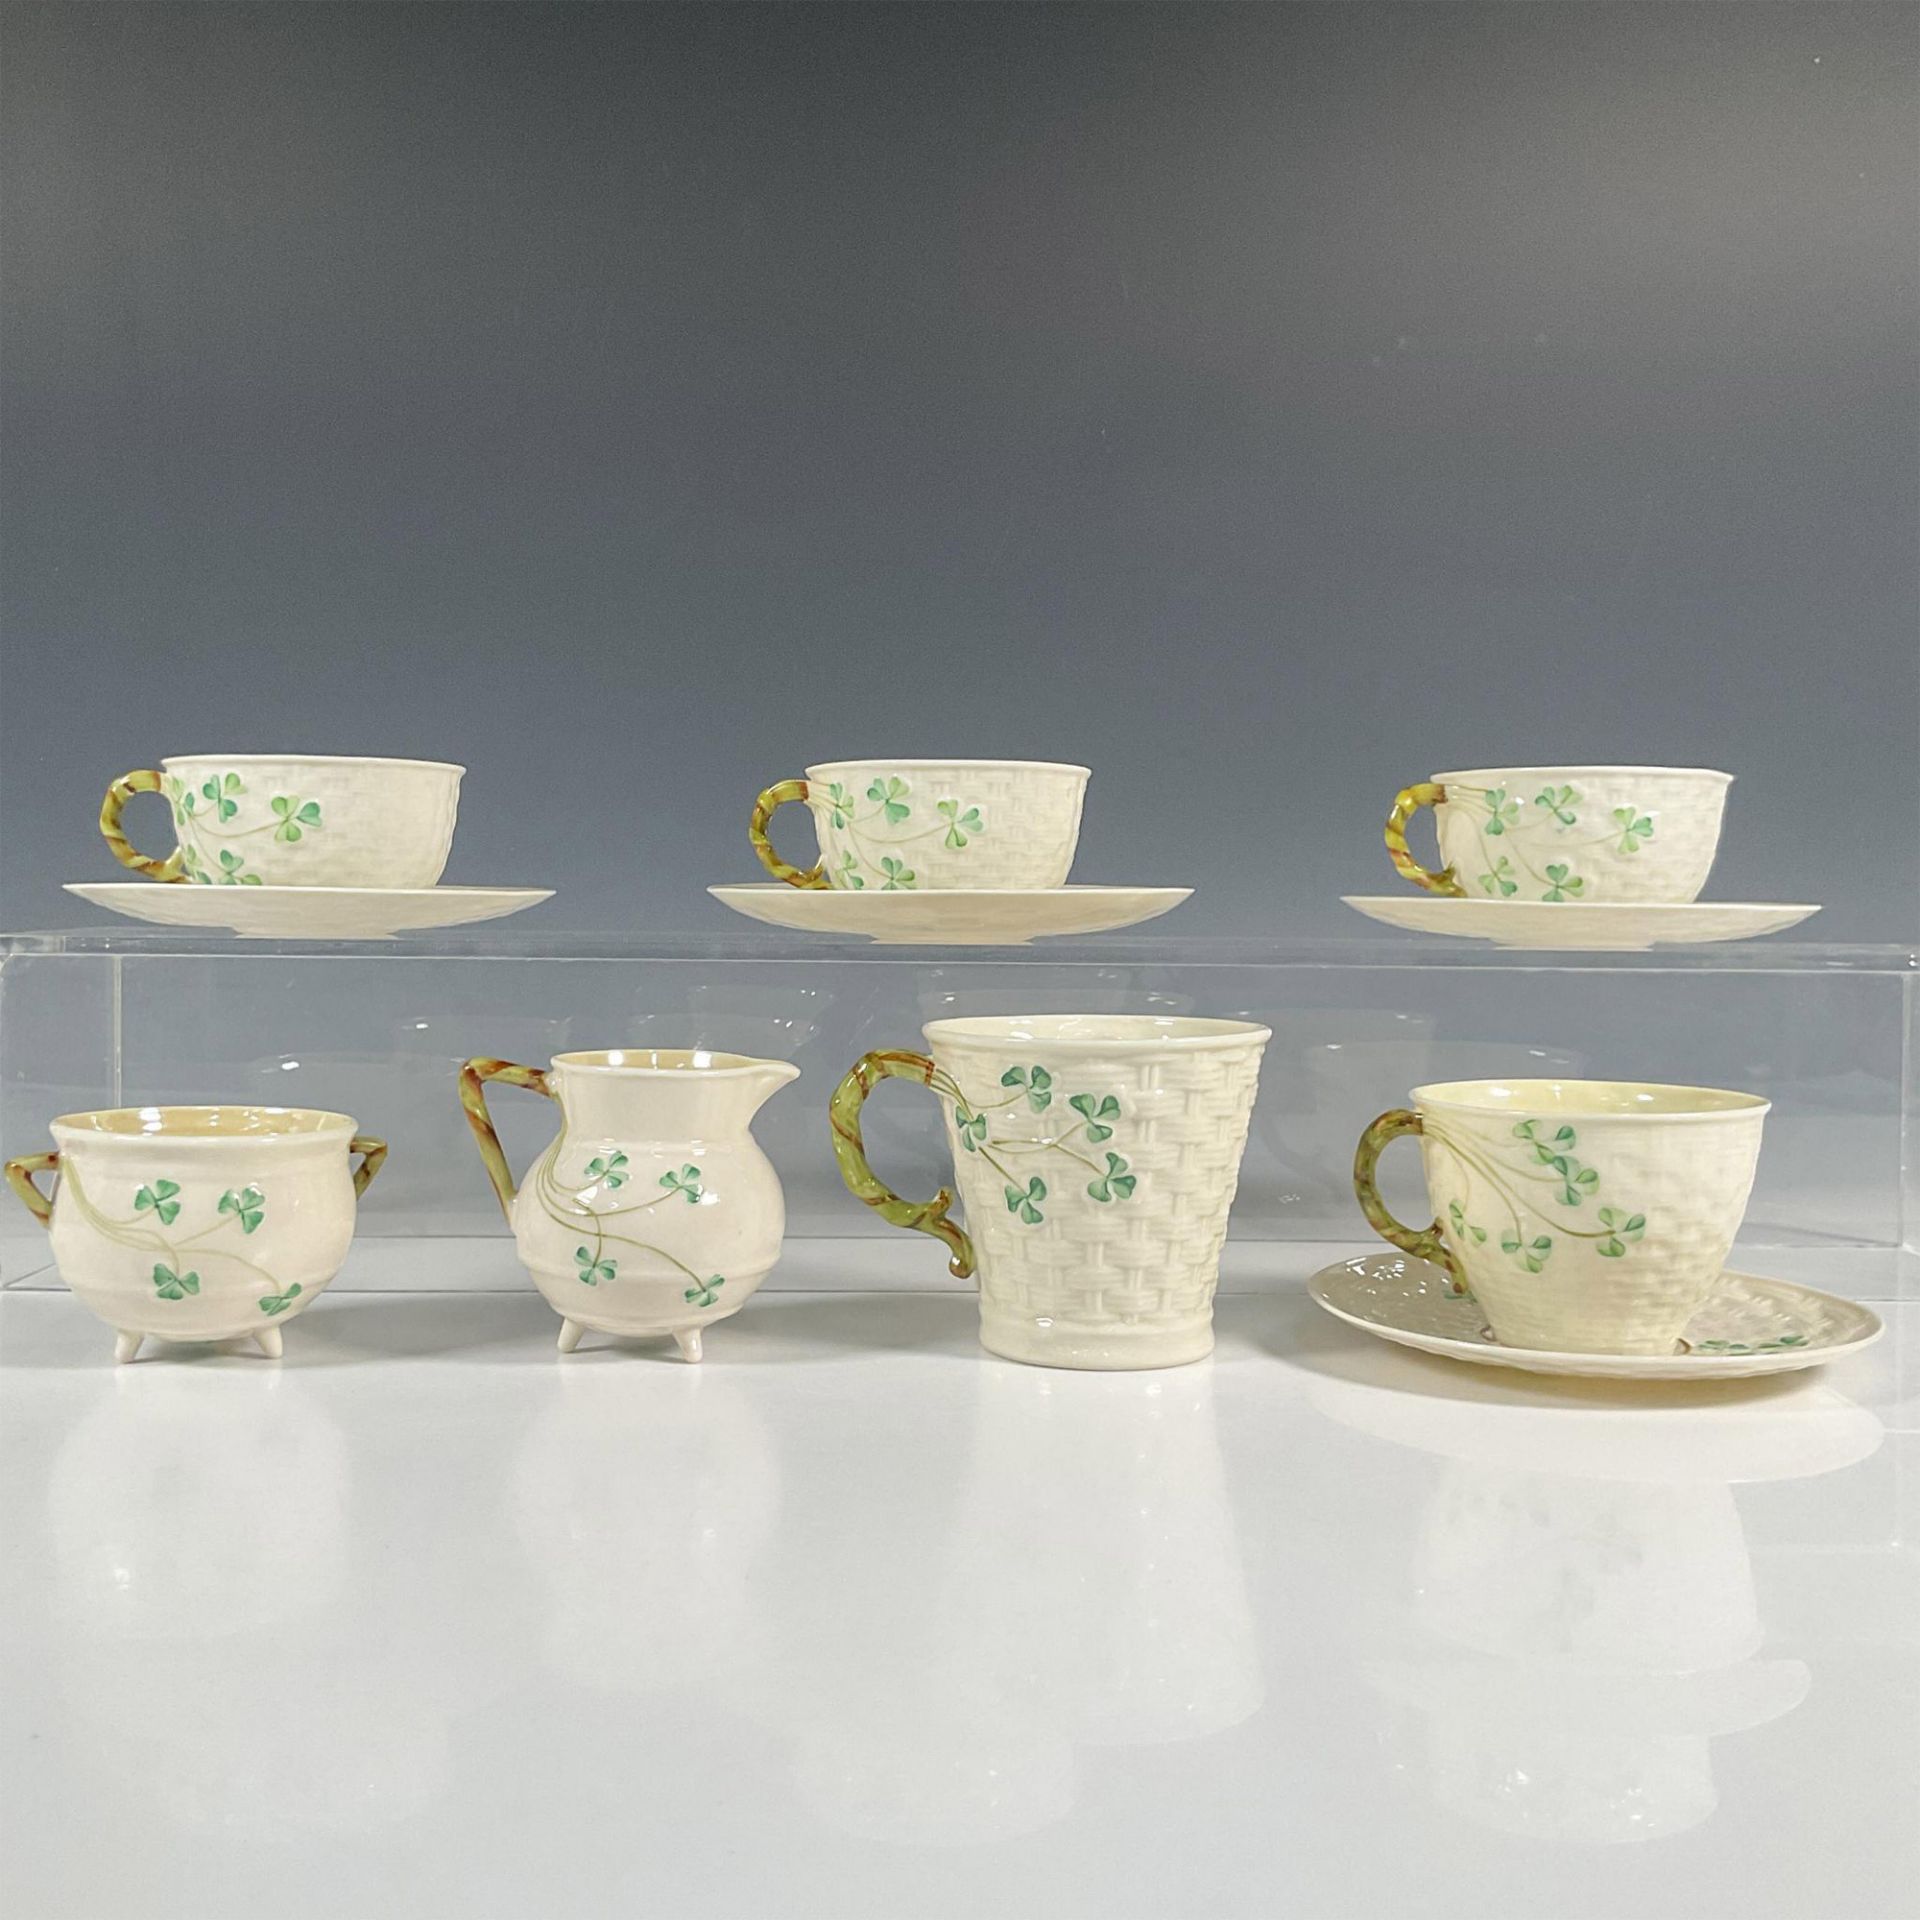 11pc Belleek Pottery Porcelain Tea Set, Shamrock - Image 2 of 3